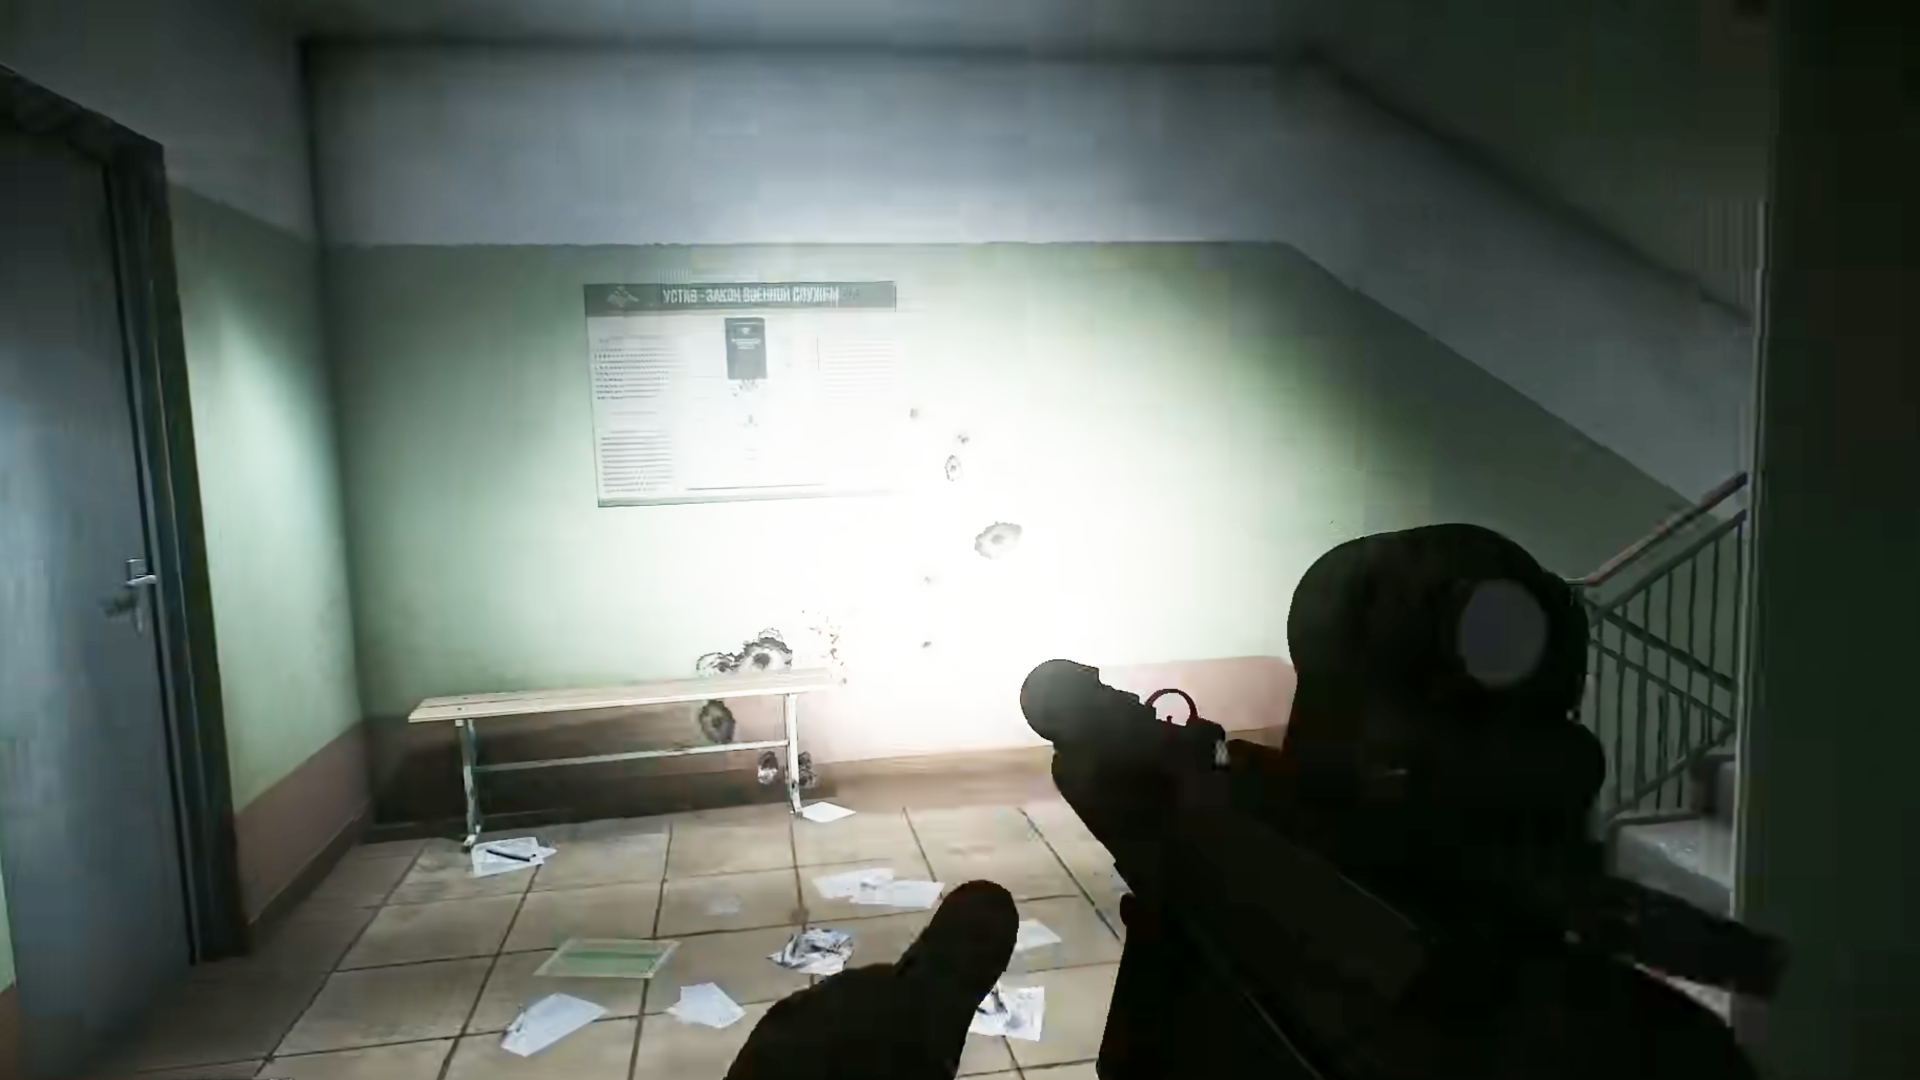 Escape From Tarkov player runs through a dark hospital with a flashlight on